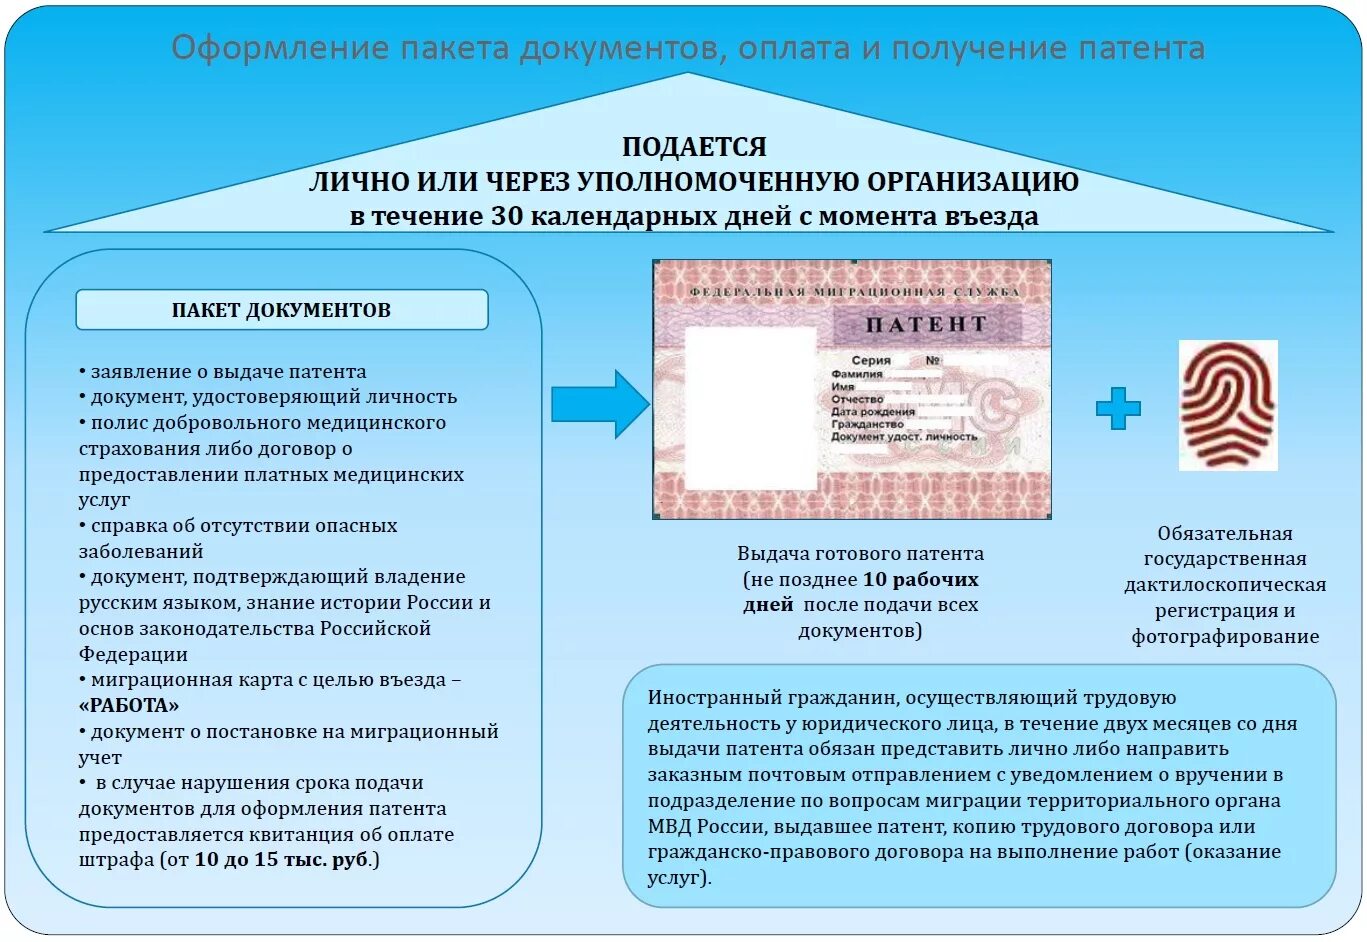 Киргизам нужен патент. Патент к документу иностранного. Патент для иностранных граждан. Патент на работу для иностранных граждан. Документ иностранного гражданина.